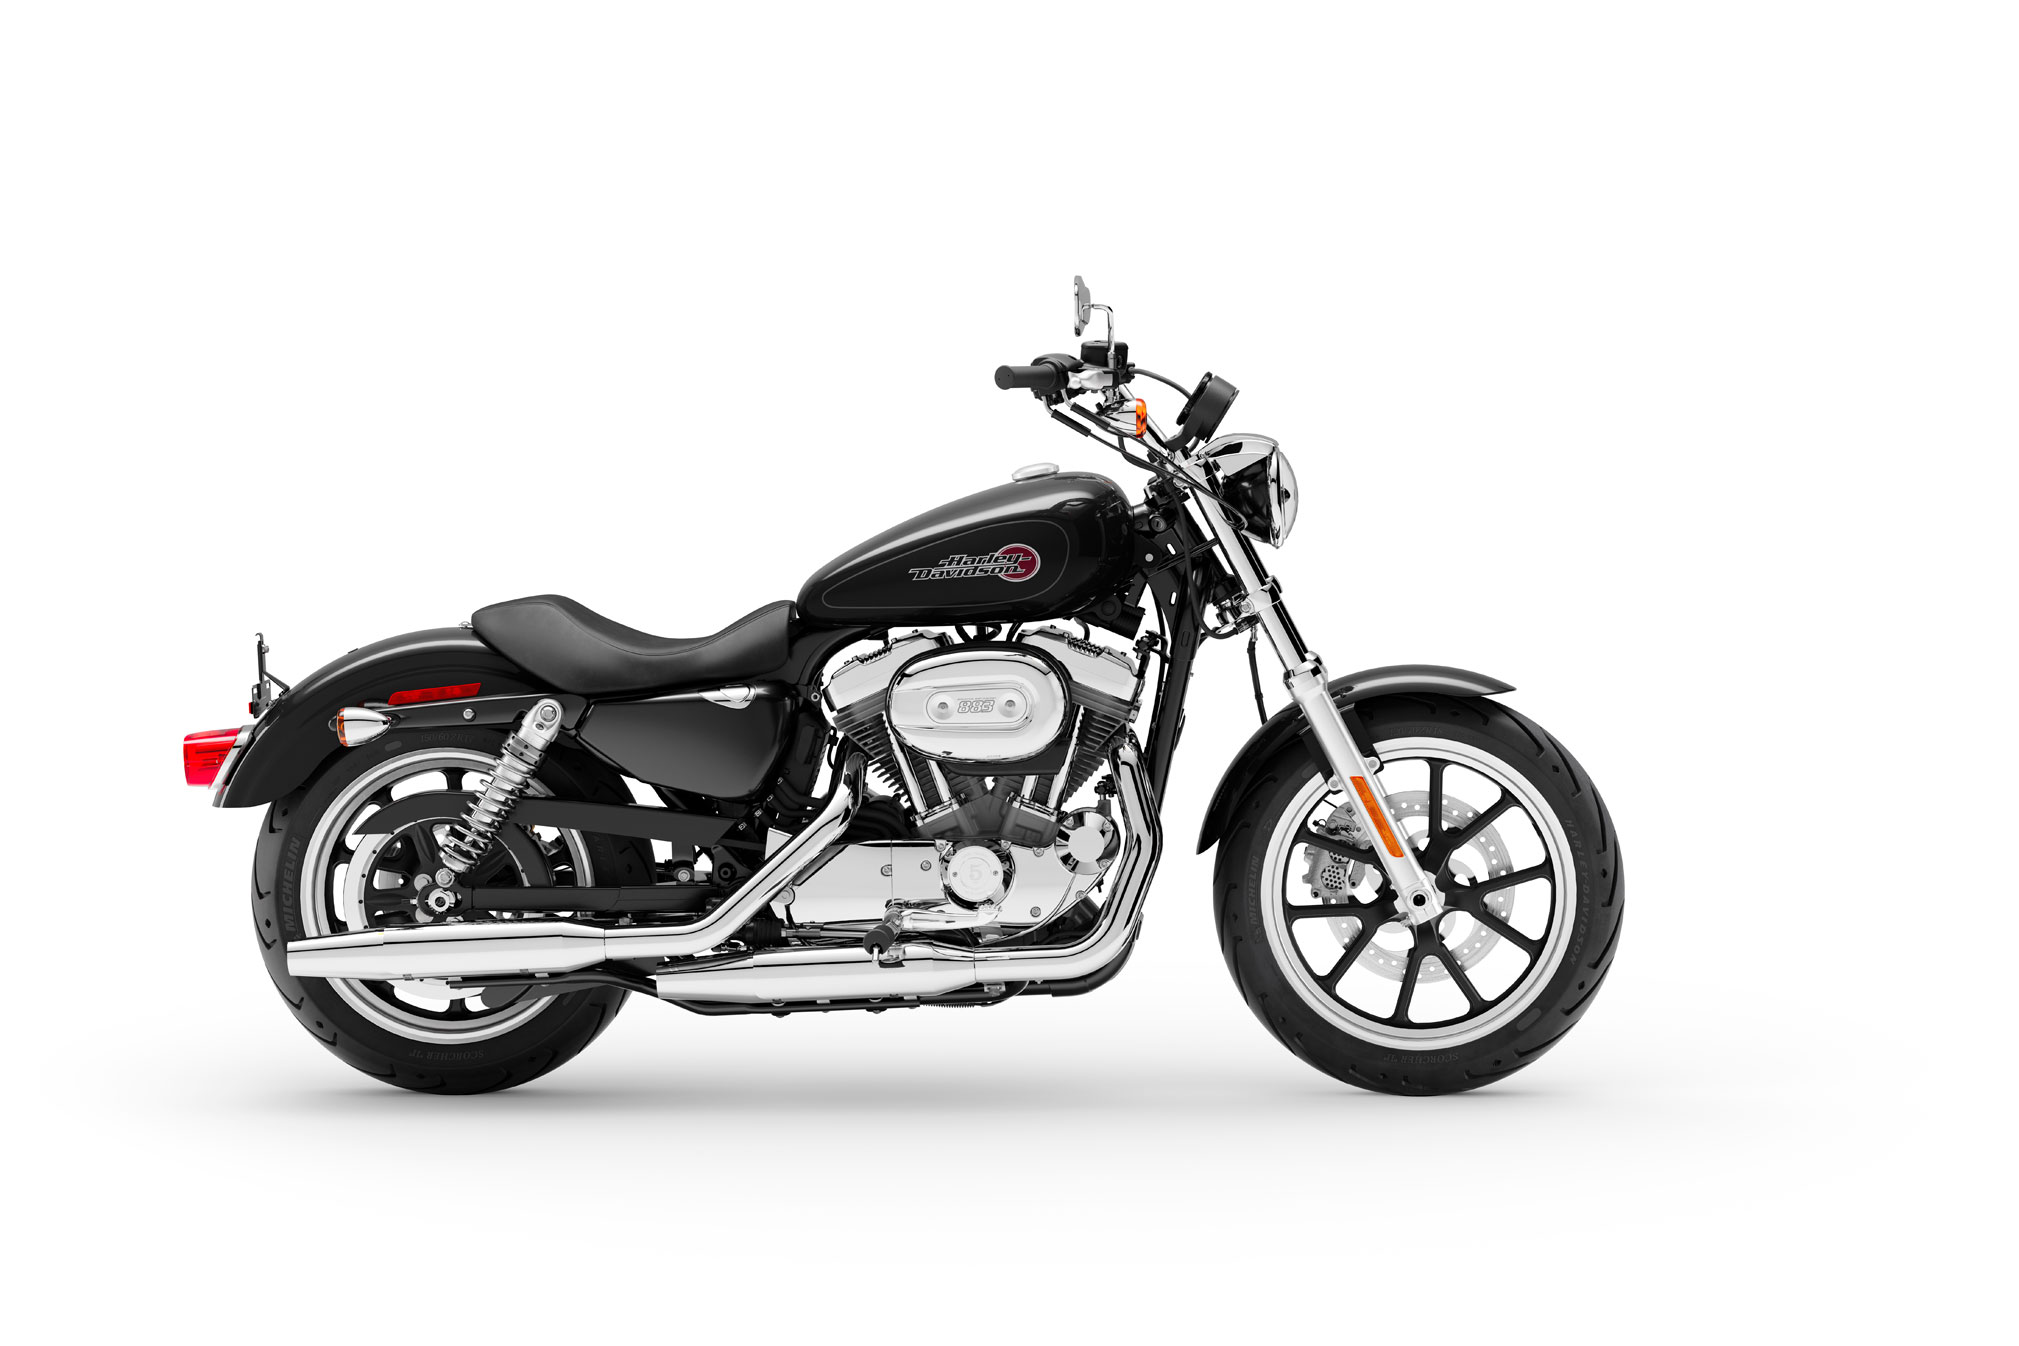  2019 Harley Davidson SuperLow Guide Total Motorcycle